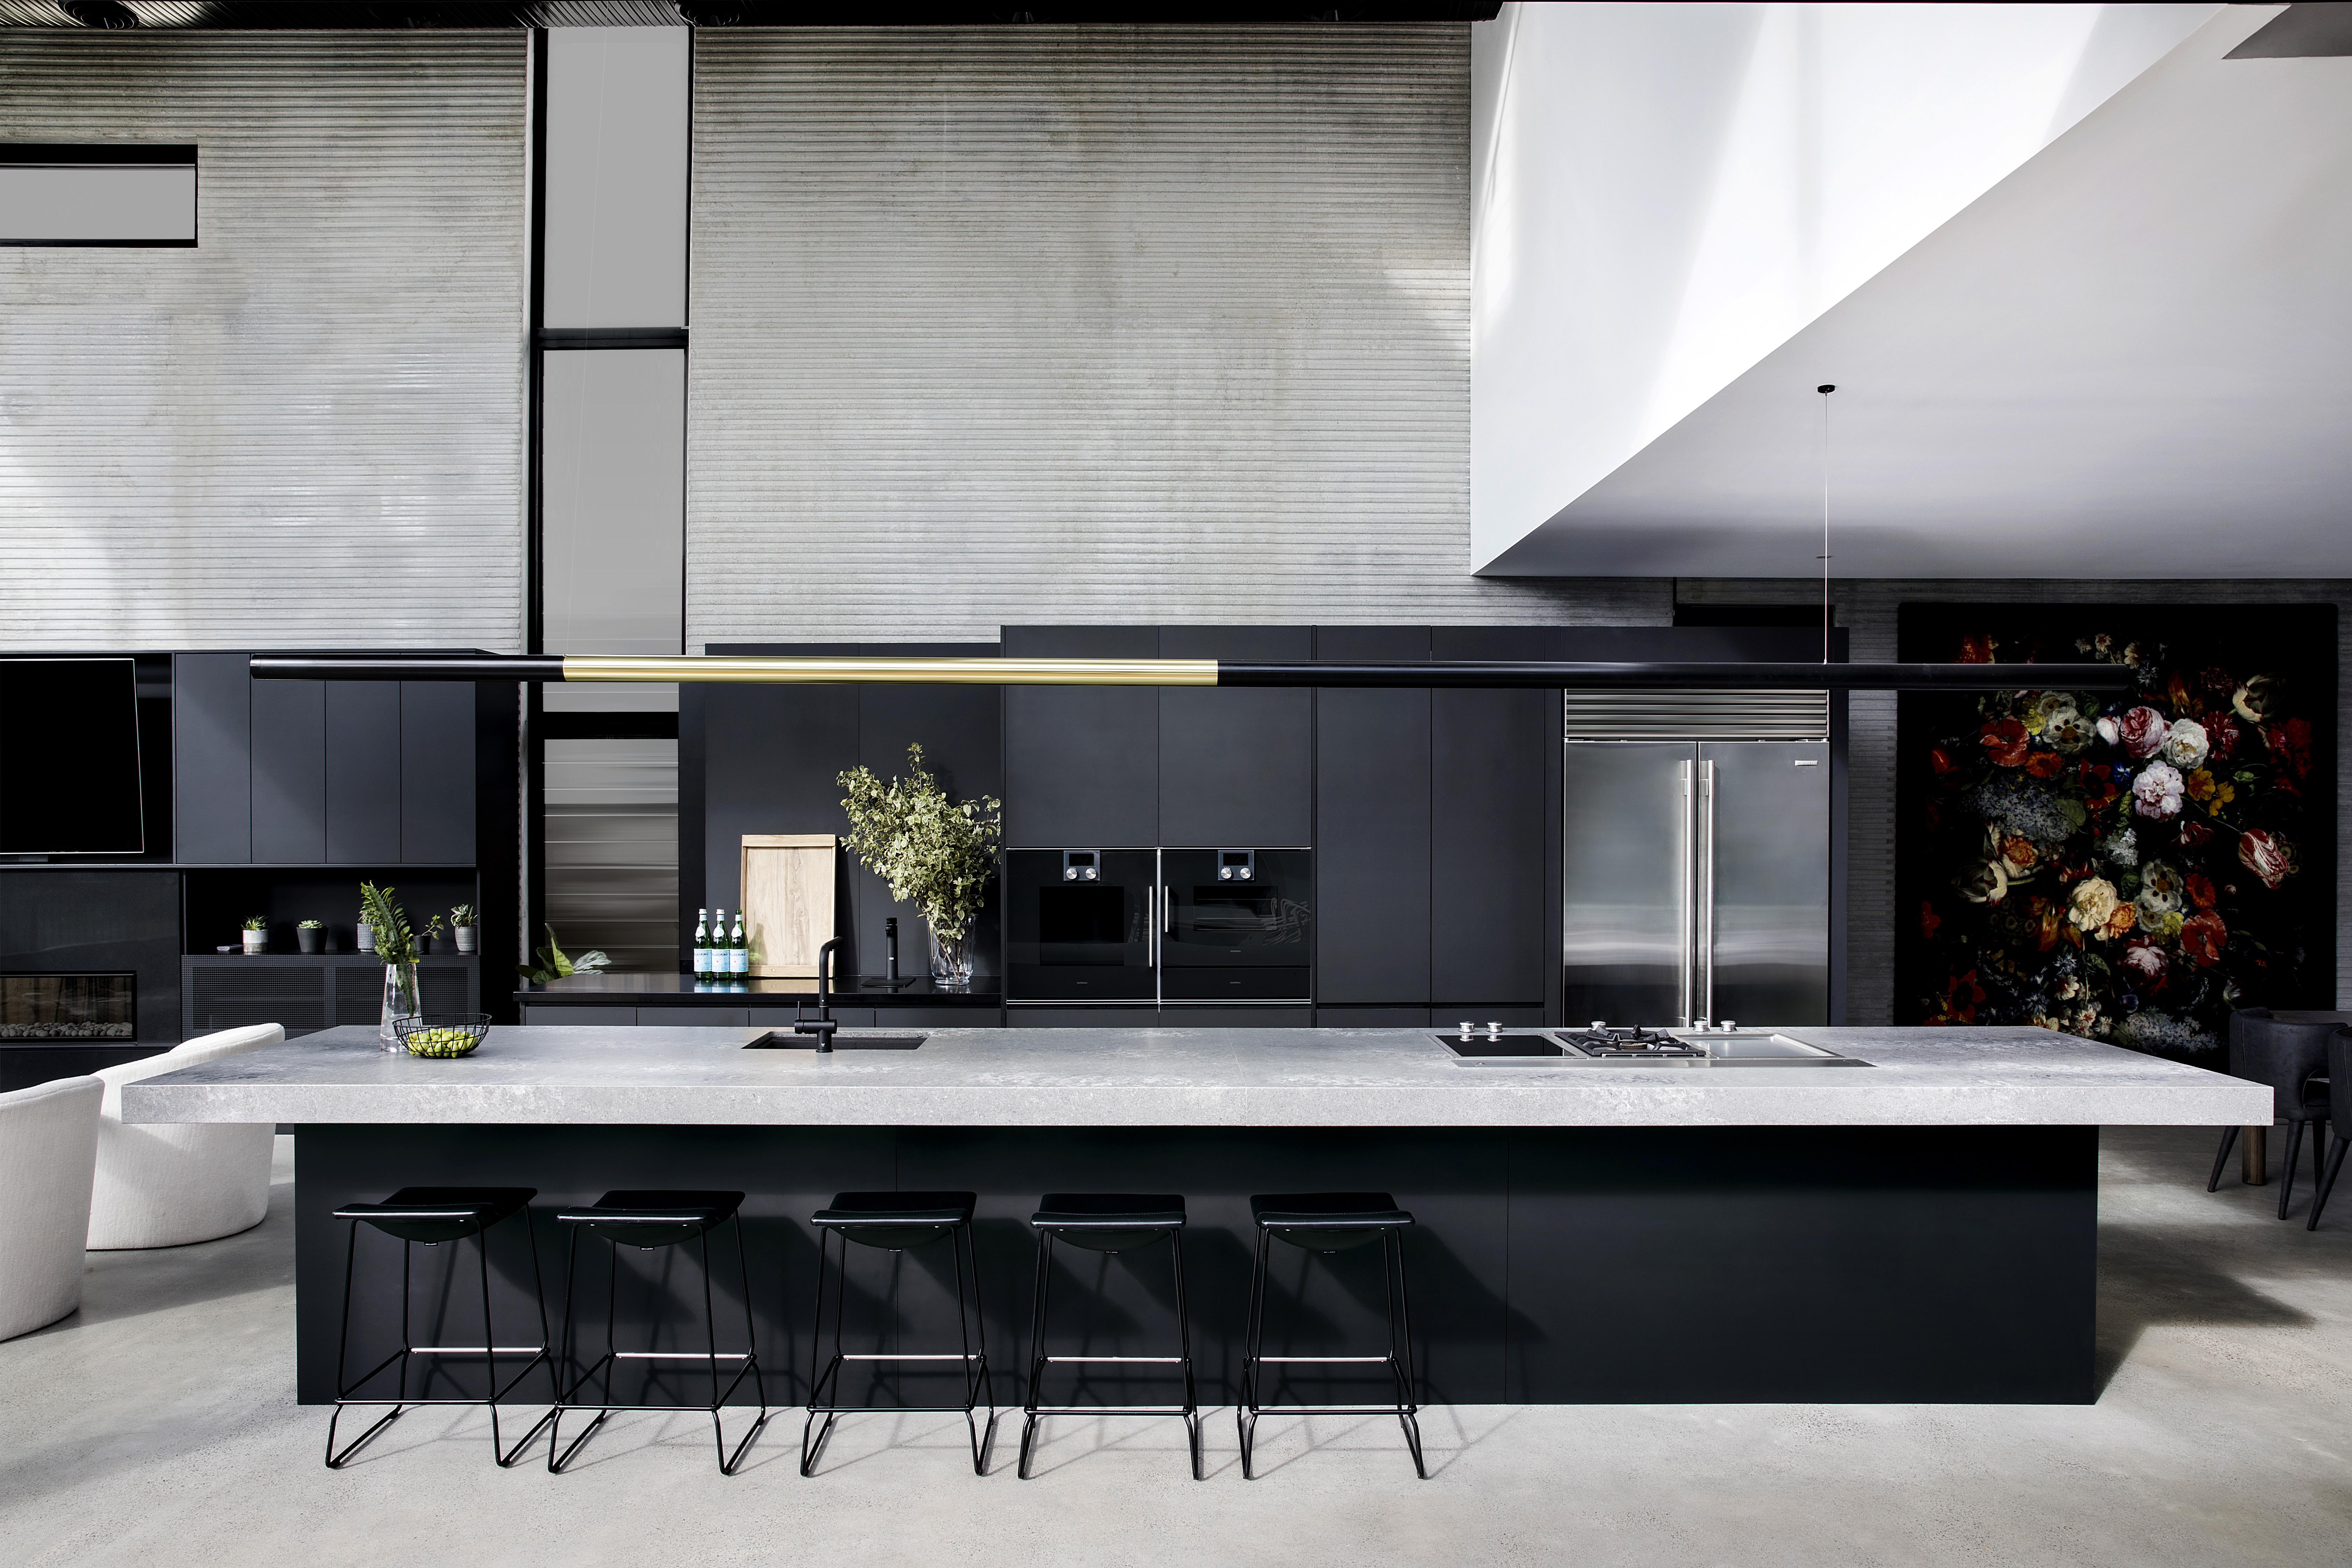 Guy Sebastian's kitchen design with benchtop for days